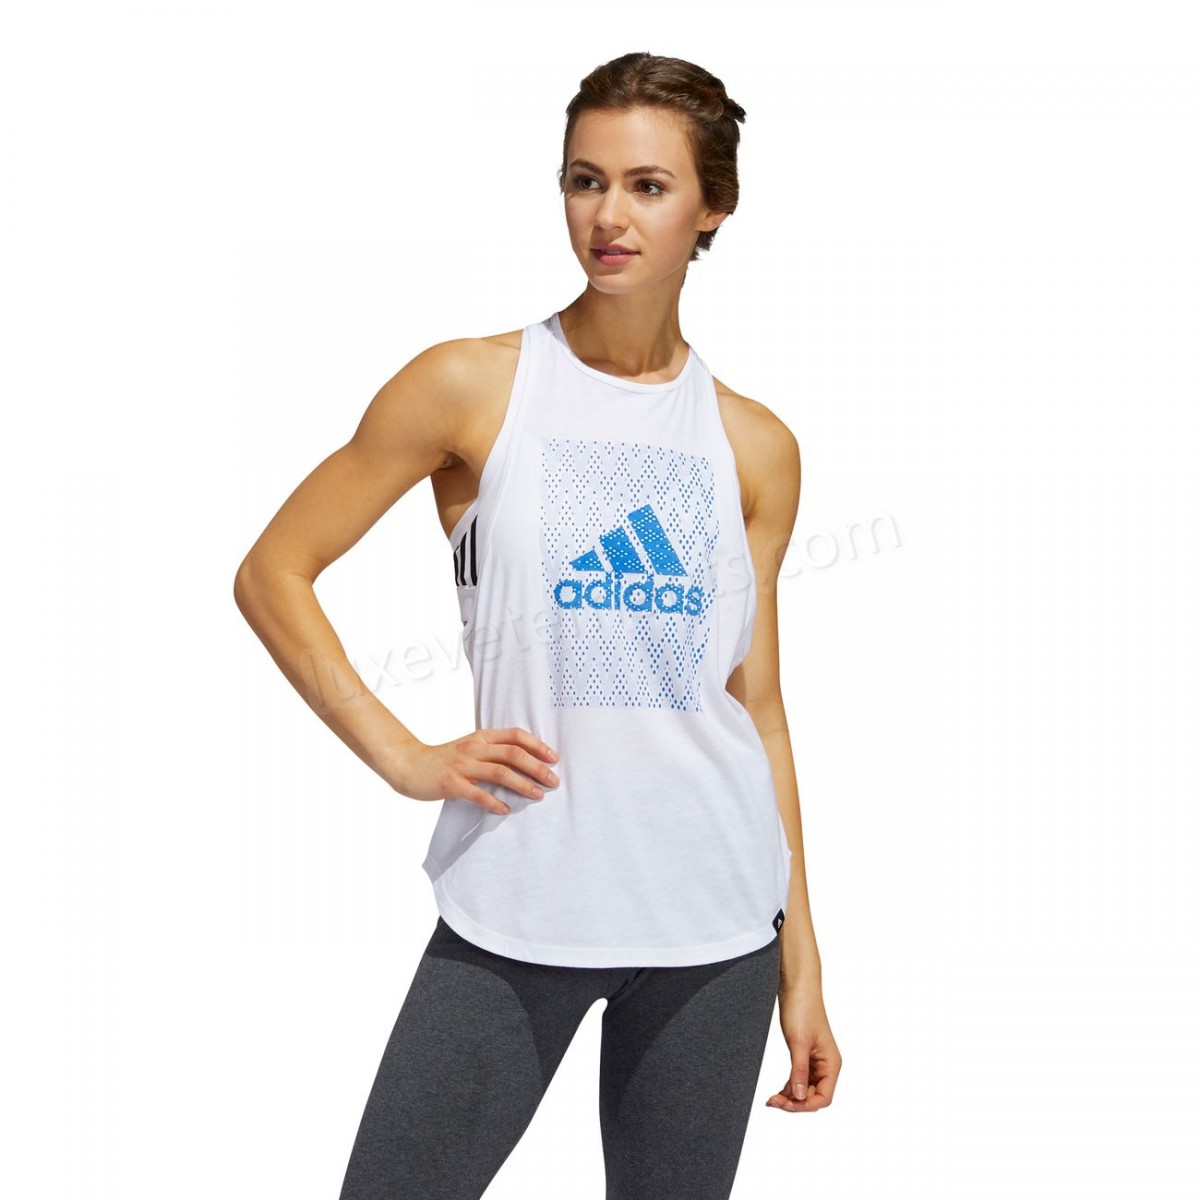 Adidas-Fitness femme ADIDAS Débardeur femme adidas Badge of Sport Graphics Vente en ligne - -2